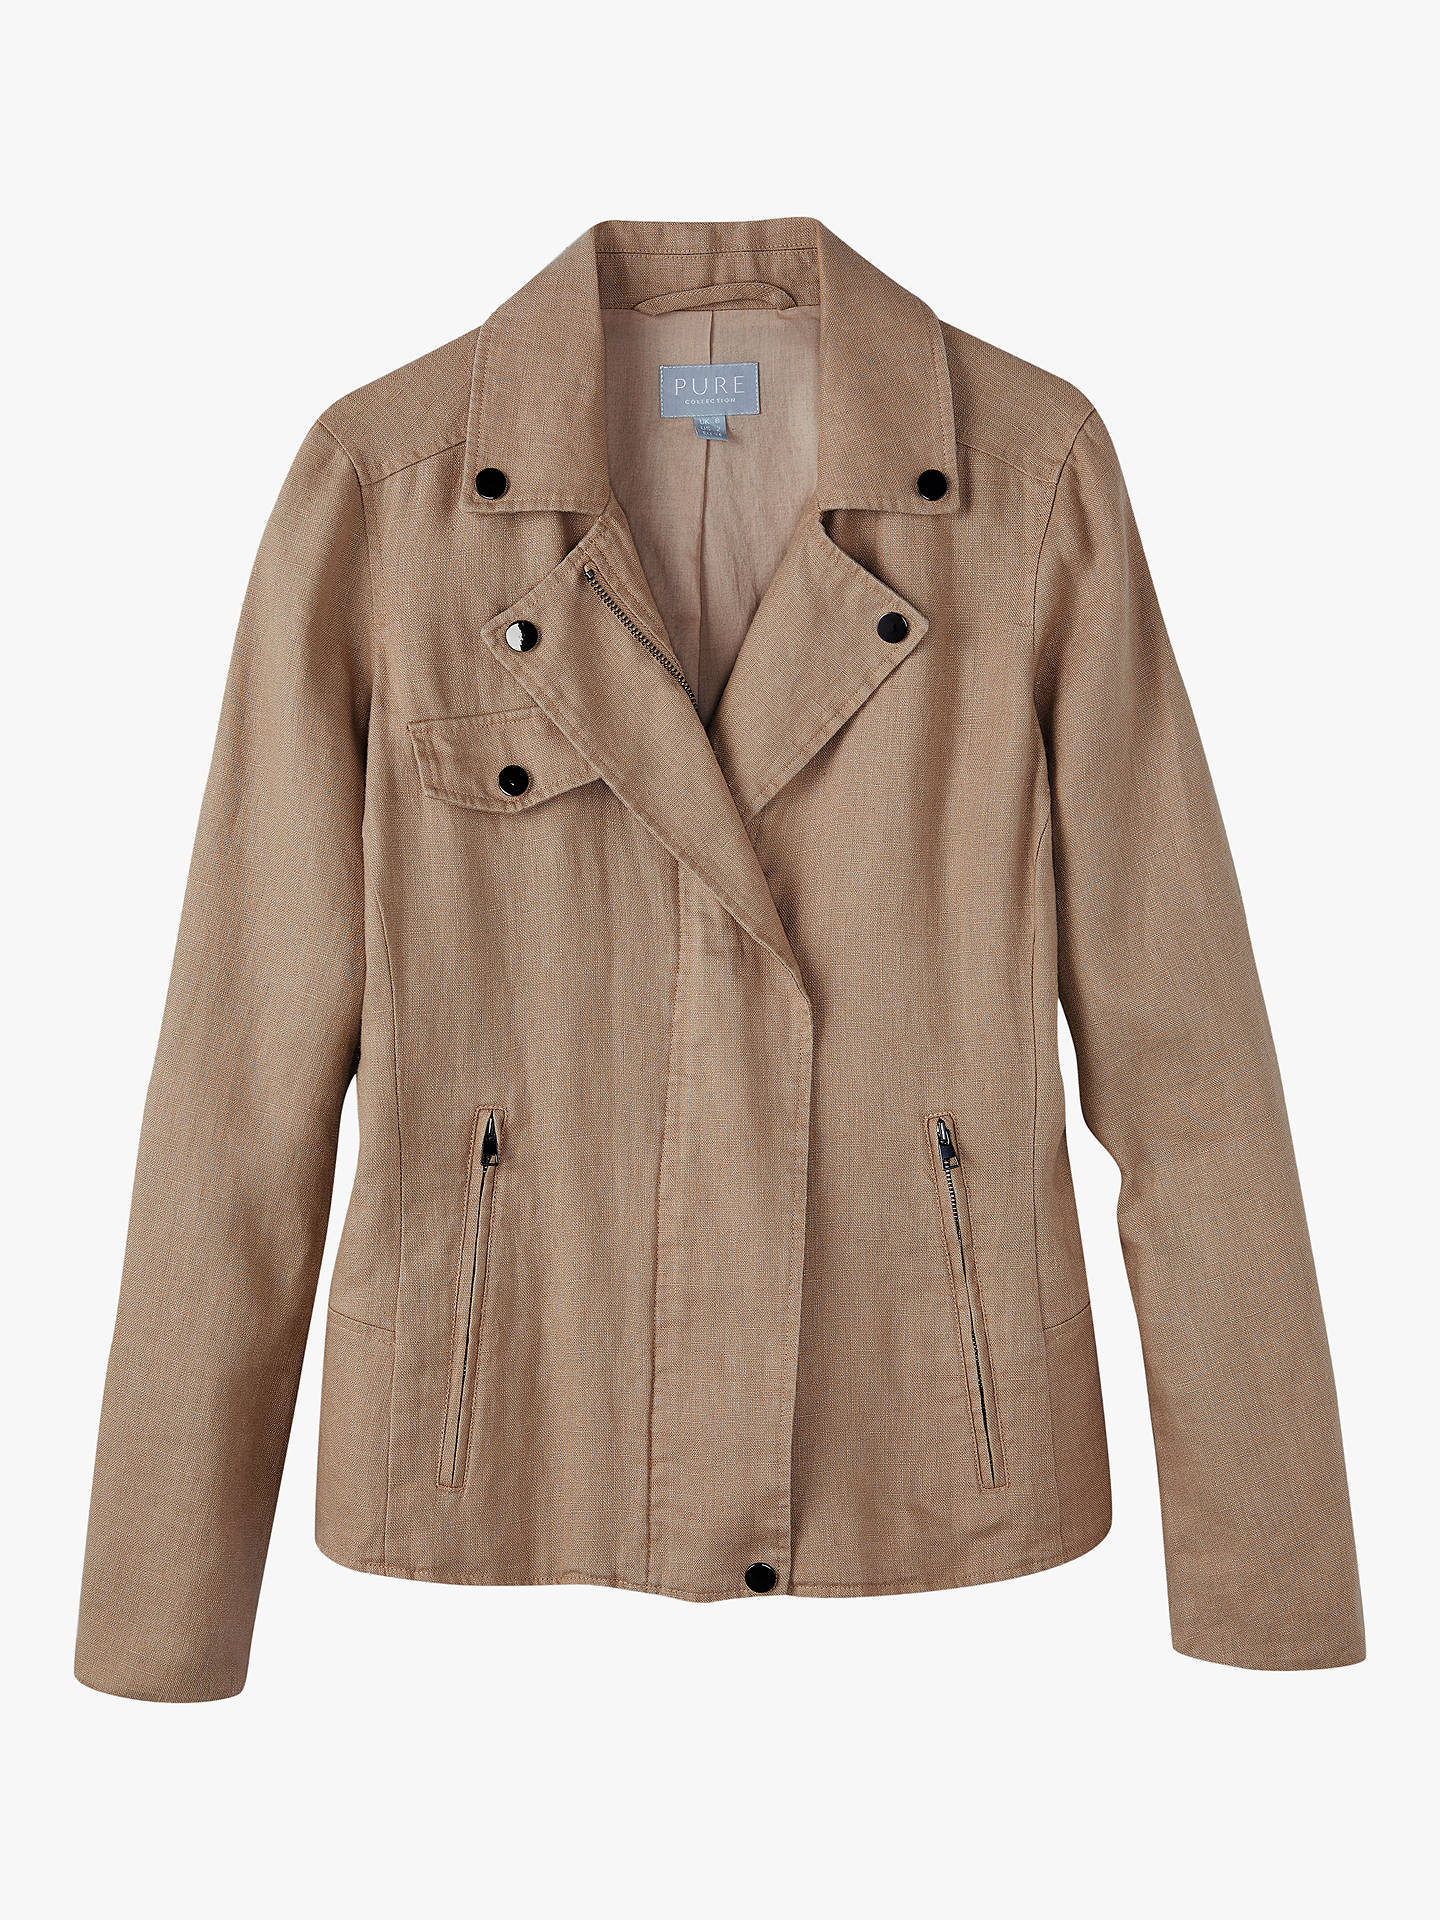 Pure Collection Linen Biker Jacket, Camel at John Lewis & Partners